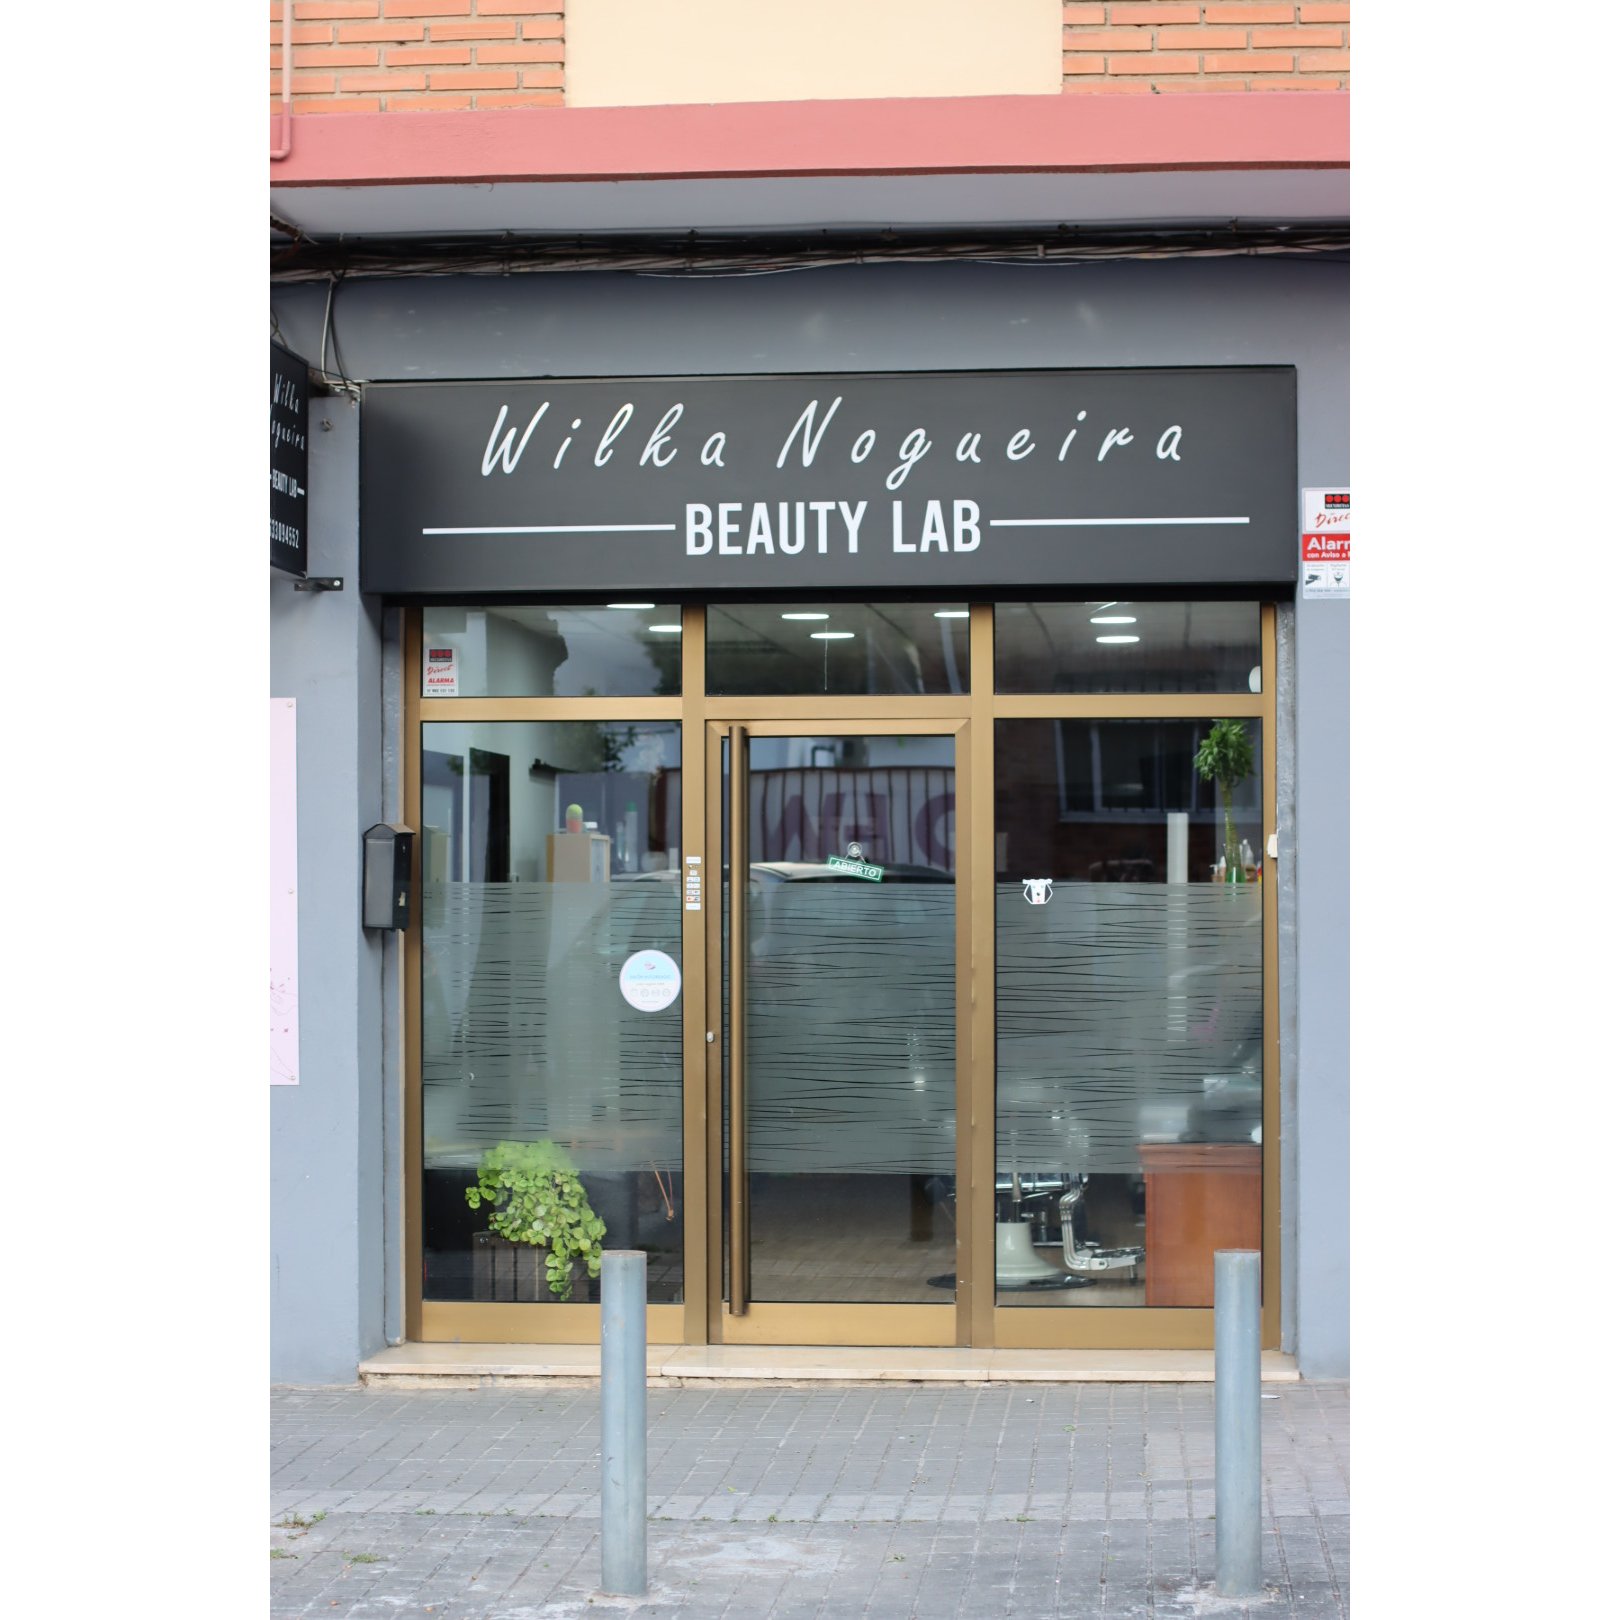 Wilka Nogueira Beauty Lab Logo